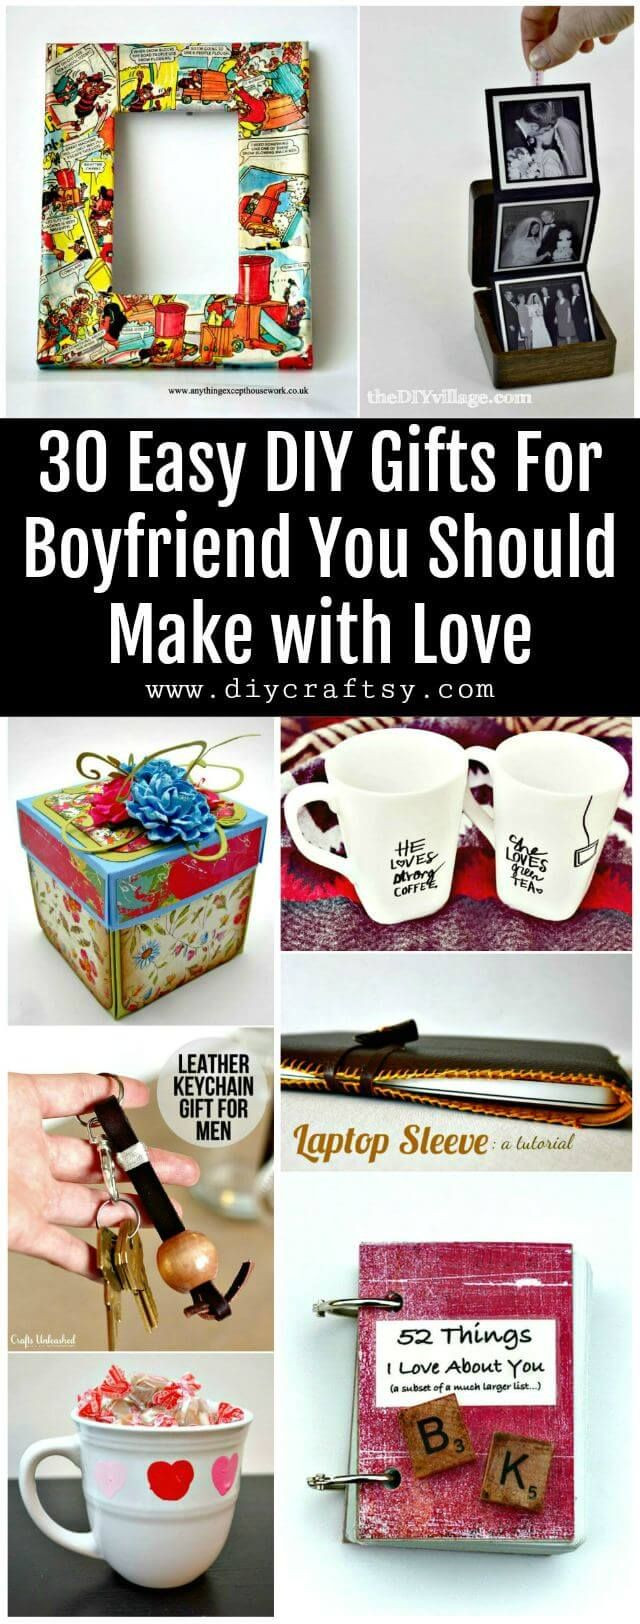 Crafty Gift Ideas For Boyfriend
 965 best DIY Crafts images on Pinterest